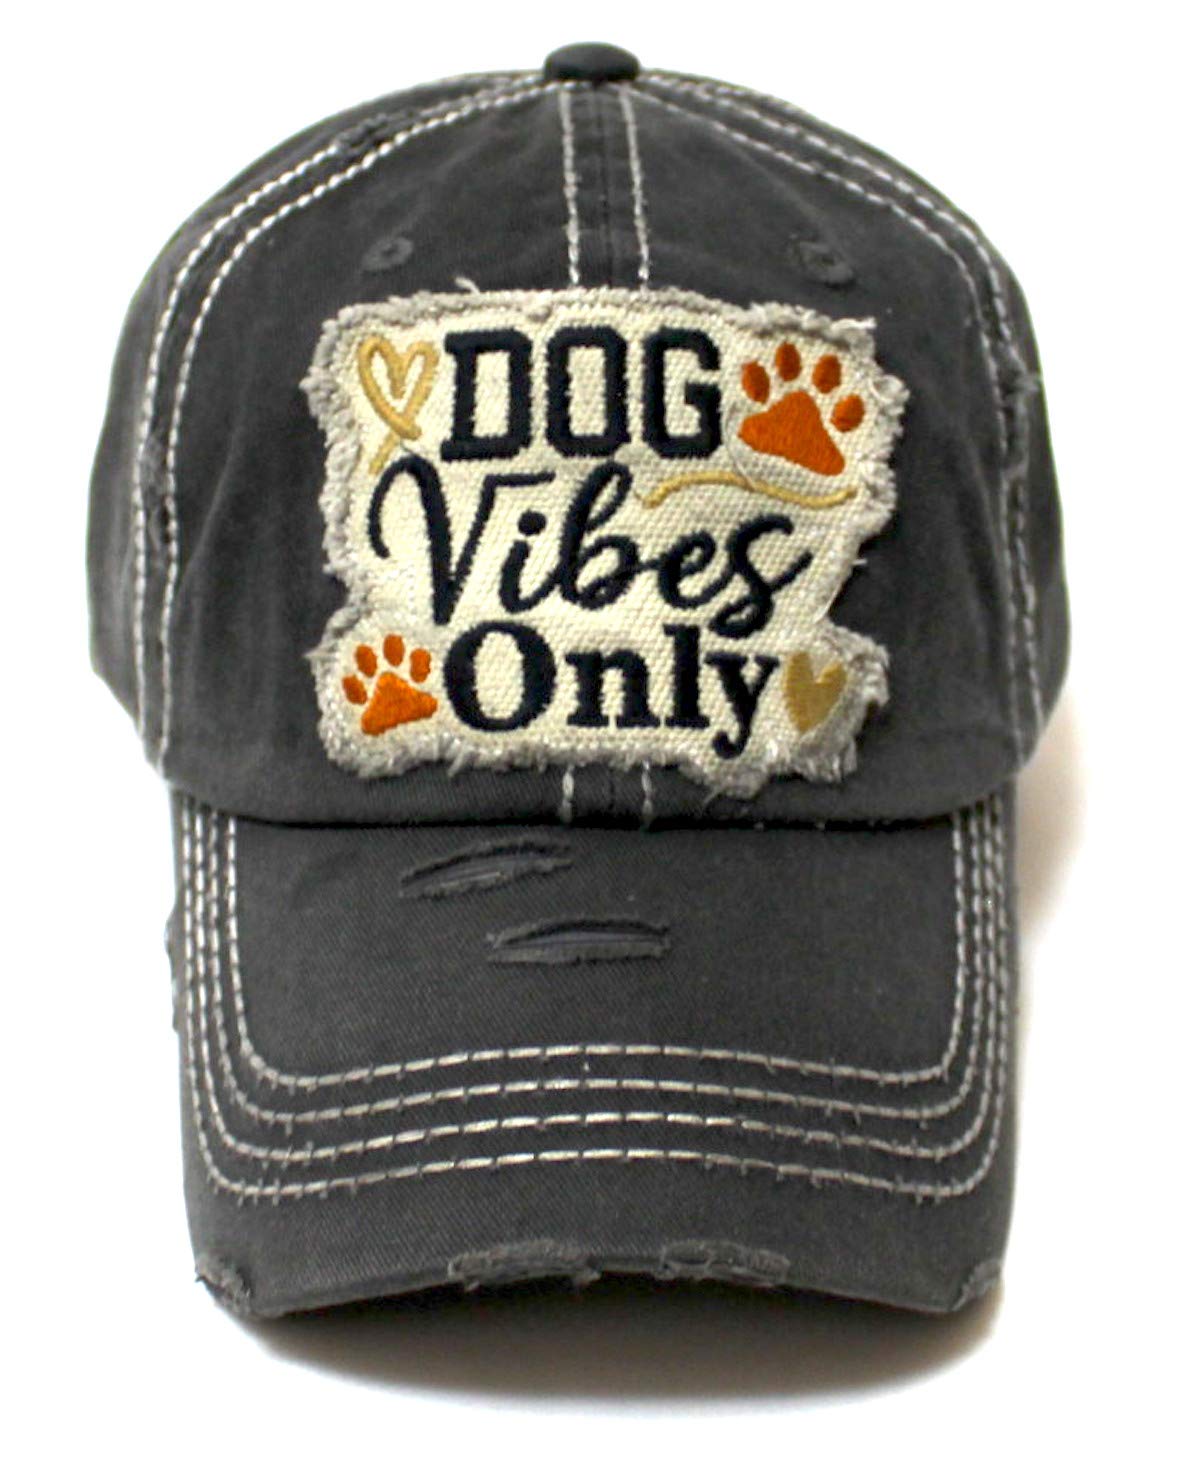 Classic Distressed Adjustable Baseball Cap Dog Vibes Only Hearts, Paws & Bone Monogram Hat, Vintage Black - Caps 'N Vintage 